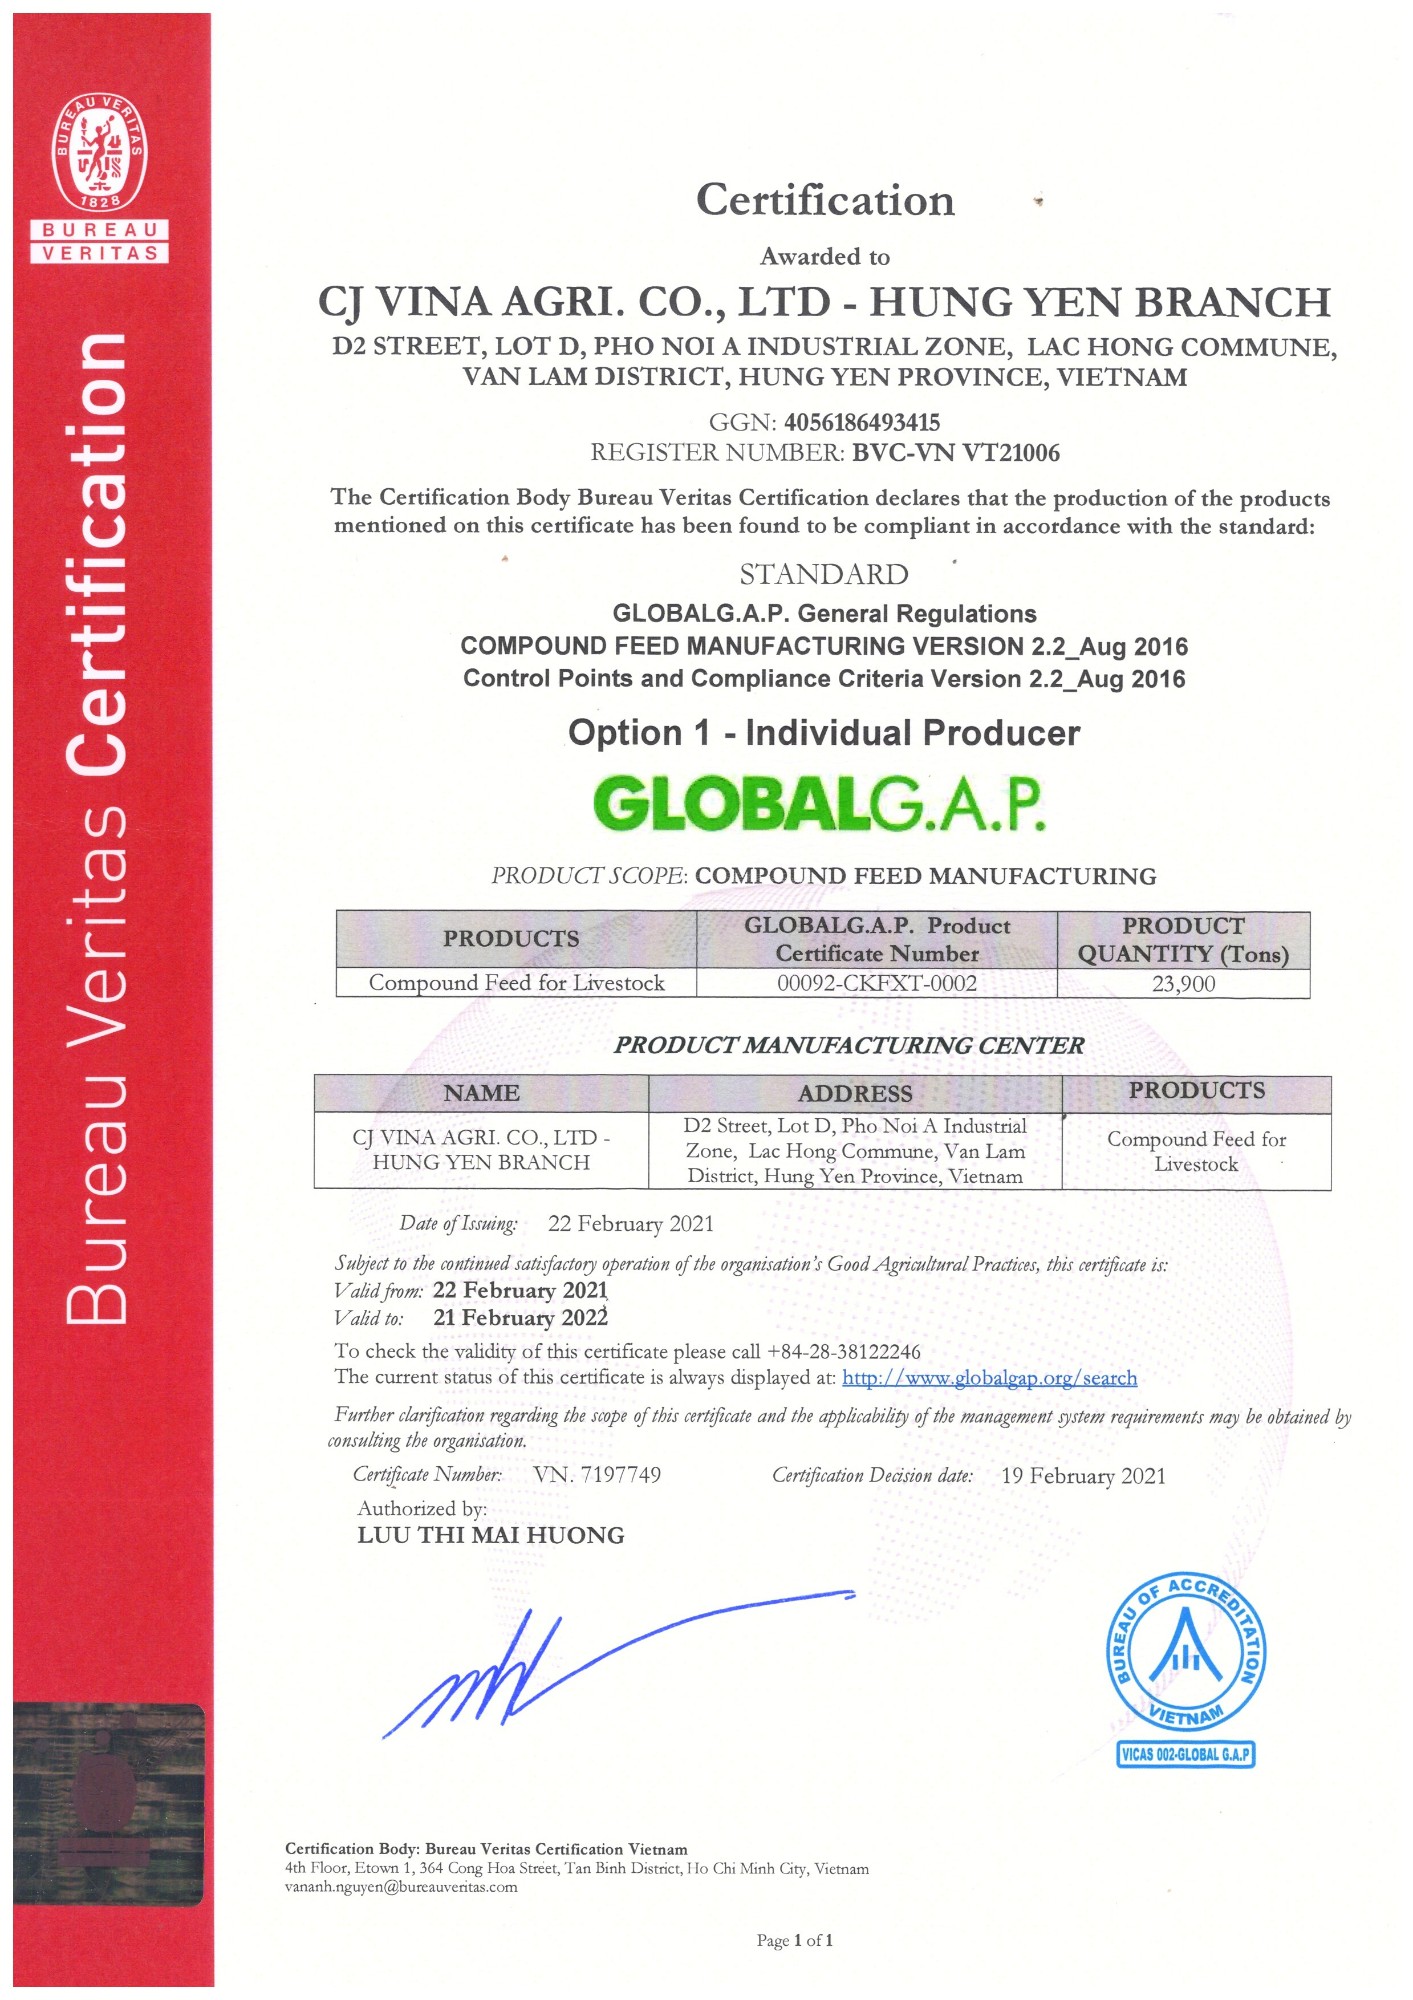 CJ Vina Agri - Hung Yen _ GLOBAL G.A.P Certificate